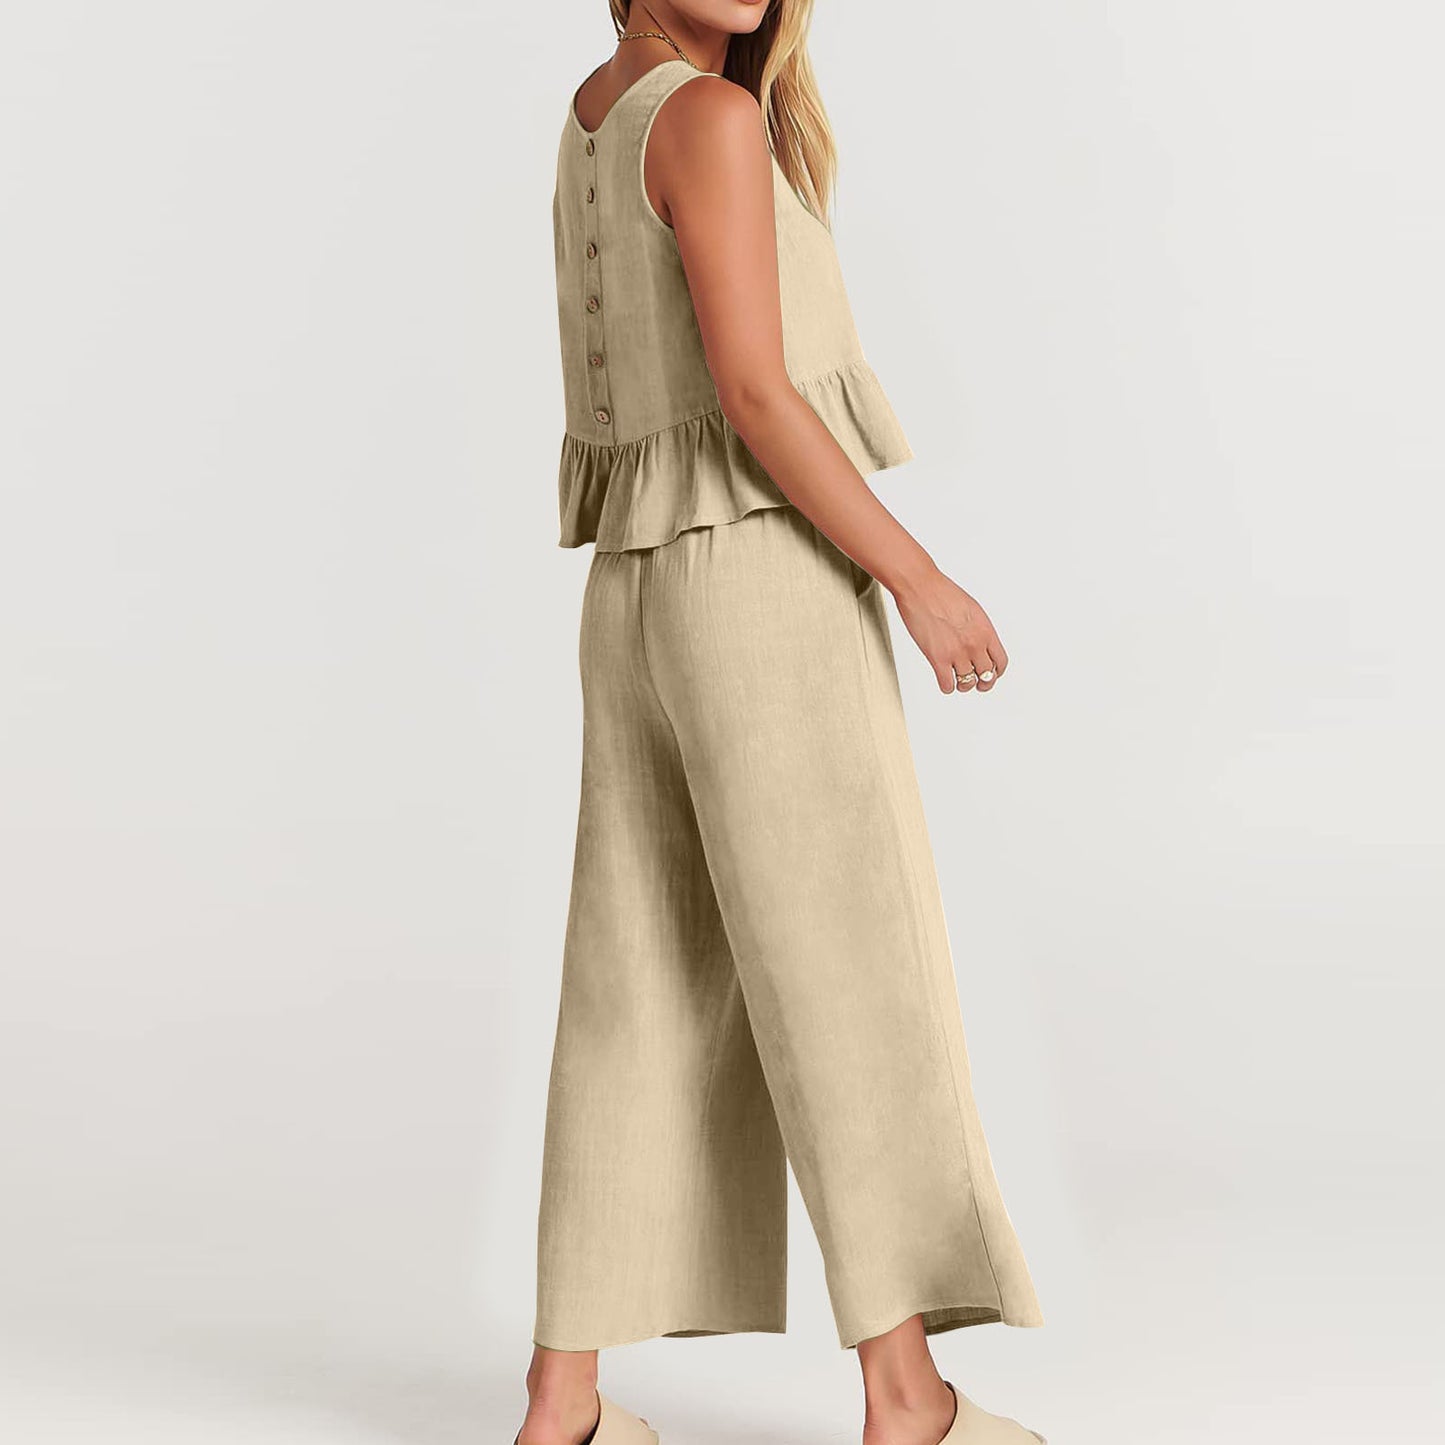 Summer Sleeveless Linen Two Pieces Women Suits